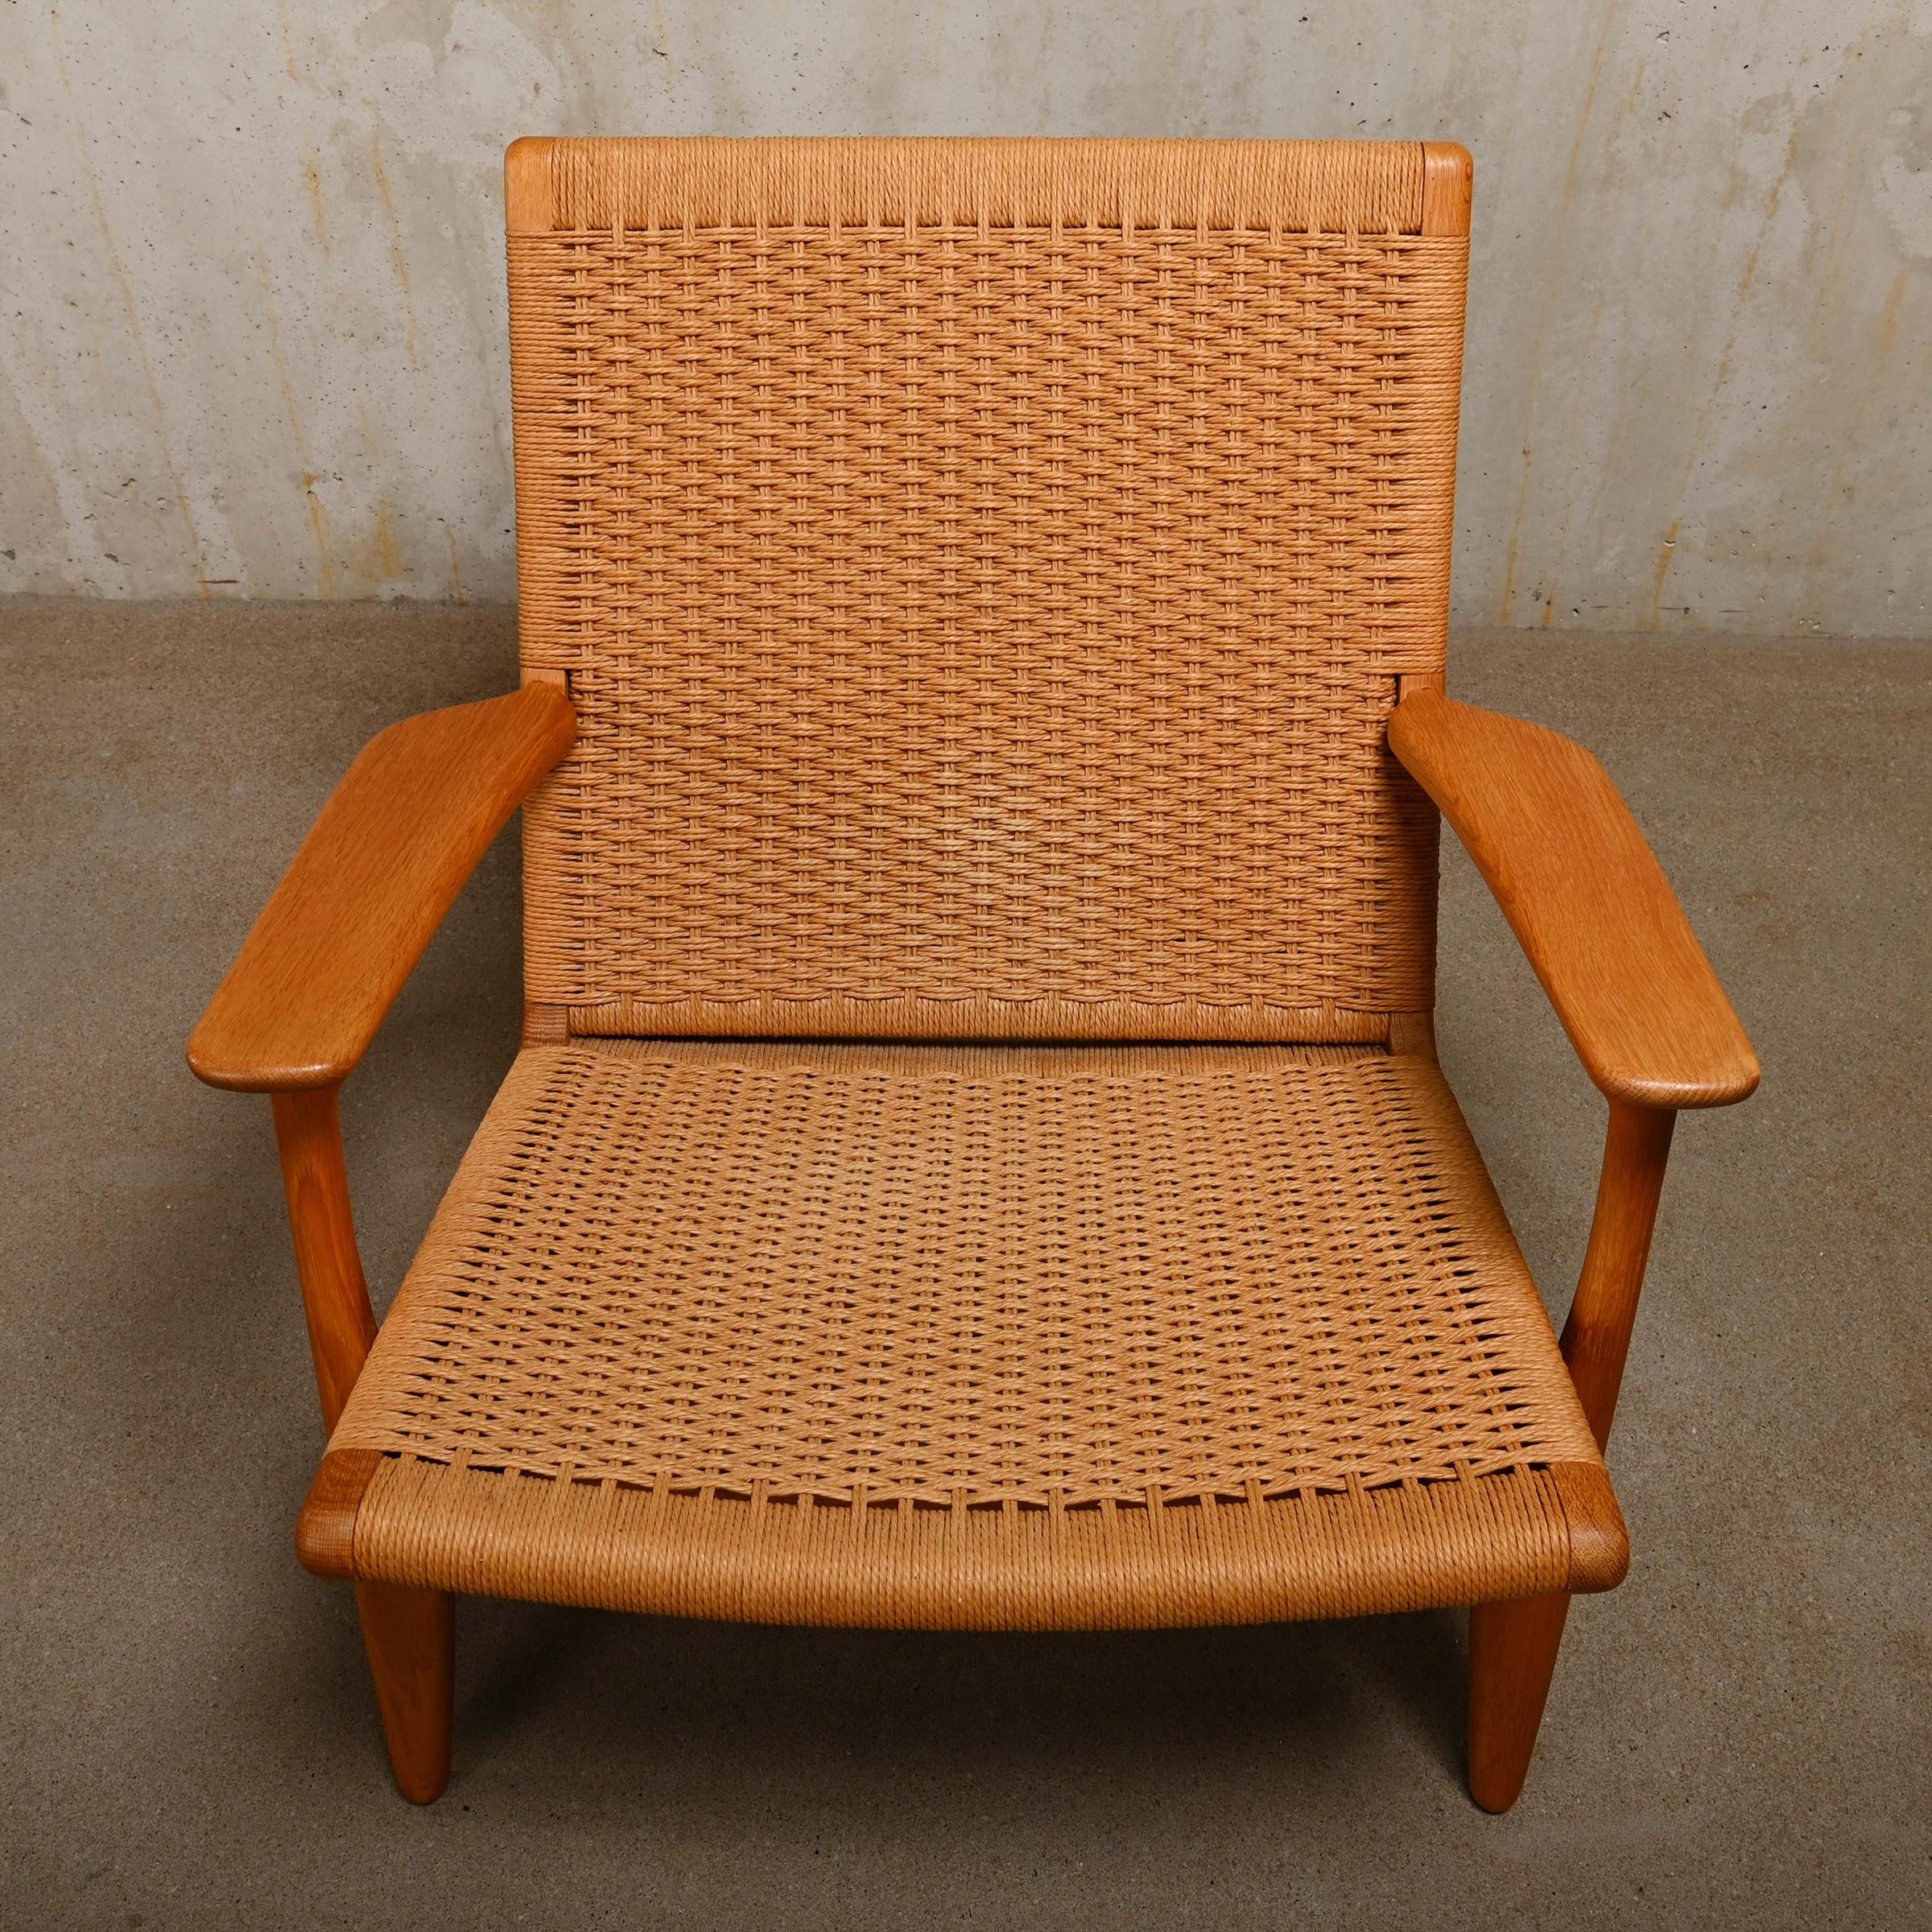 Hans J. Wegner CH25 Lounge Chair in oak and paper-cord for Carl Hansen & Son 1